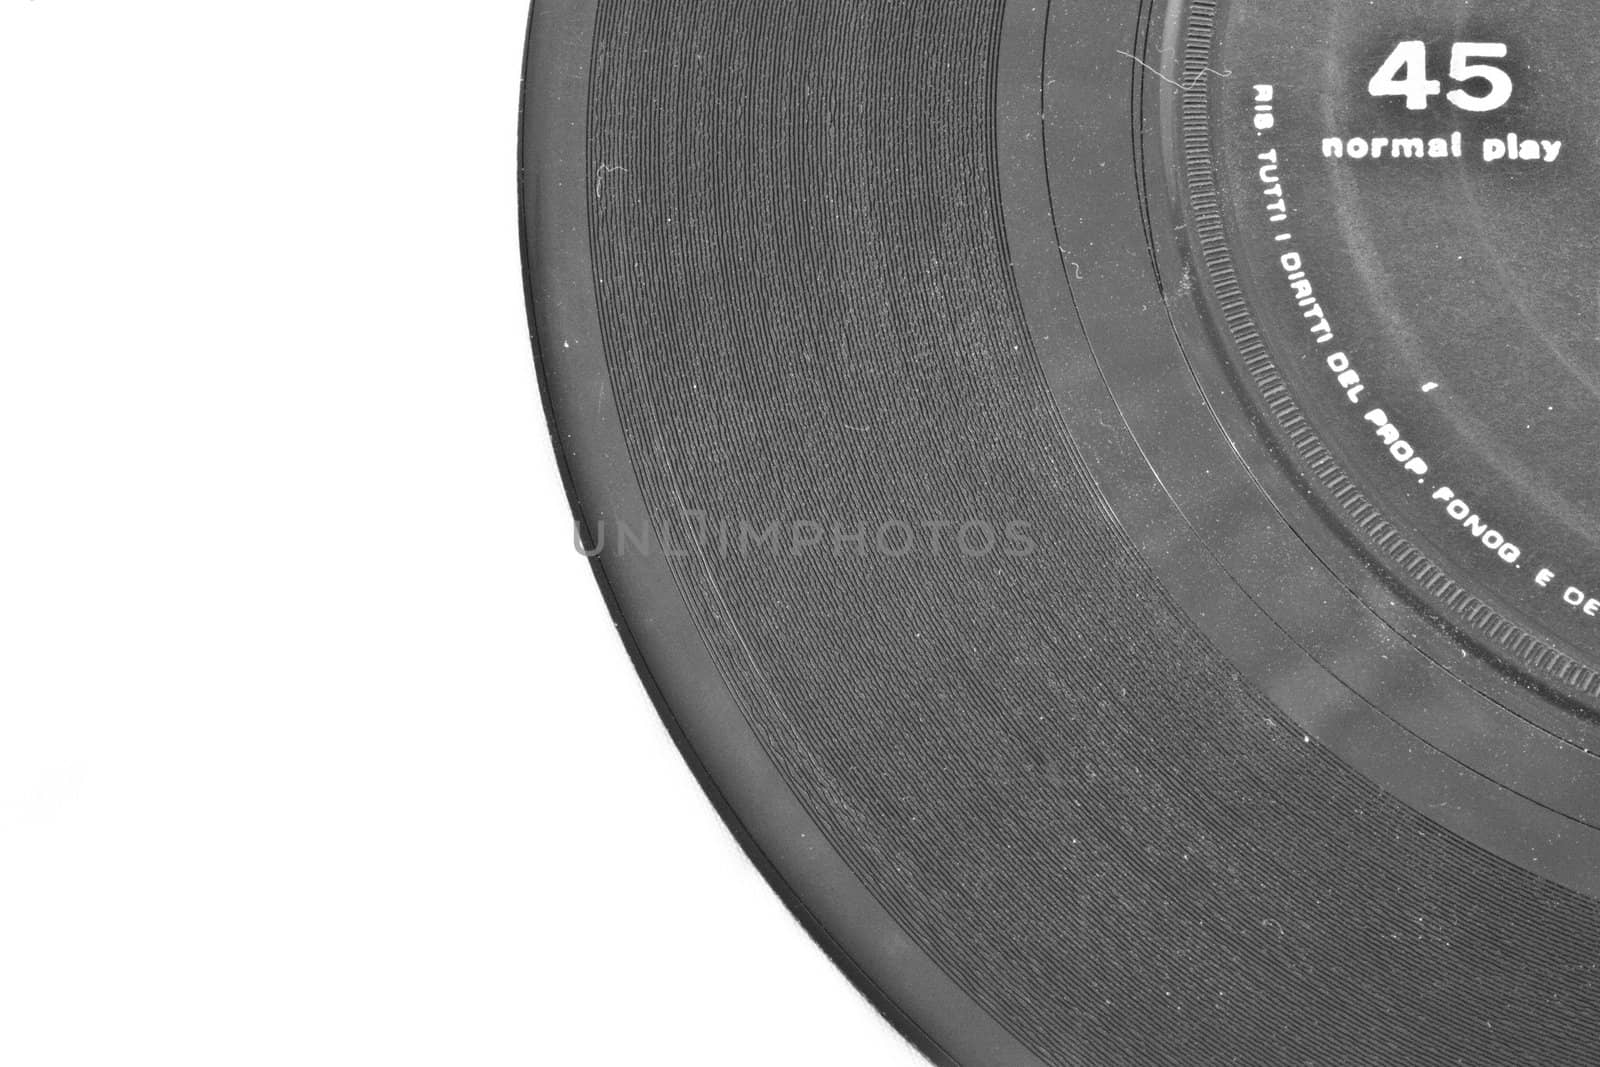 Vinil record with black label - Italian, no copyright trademarks